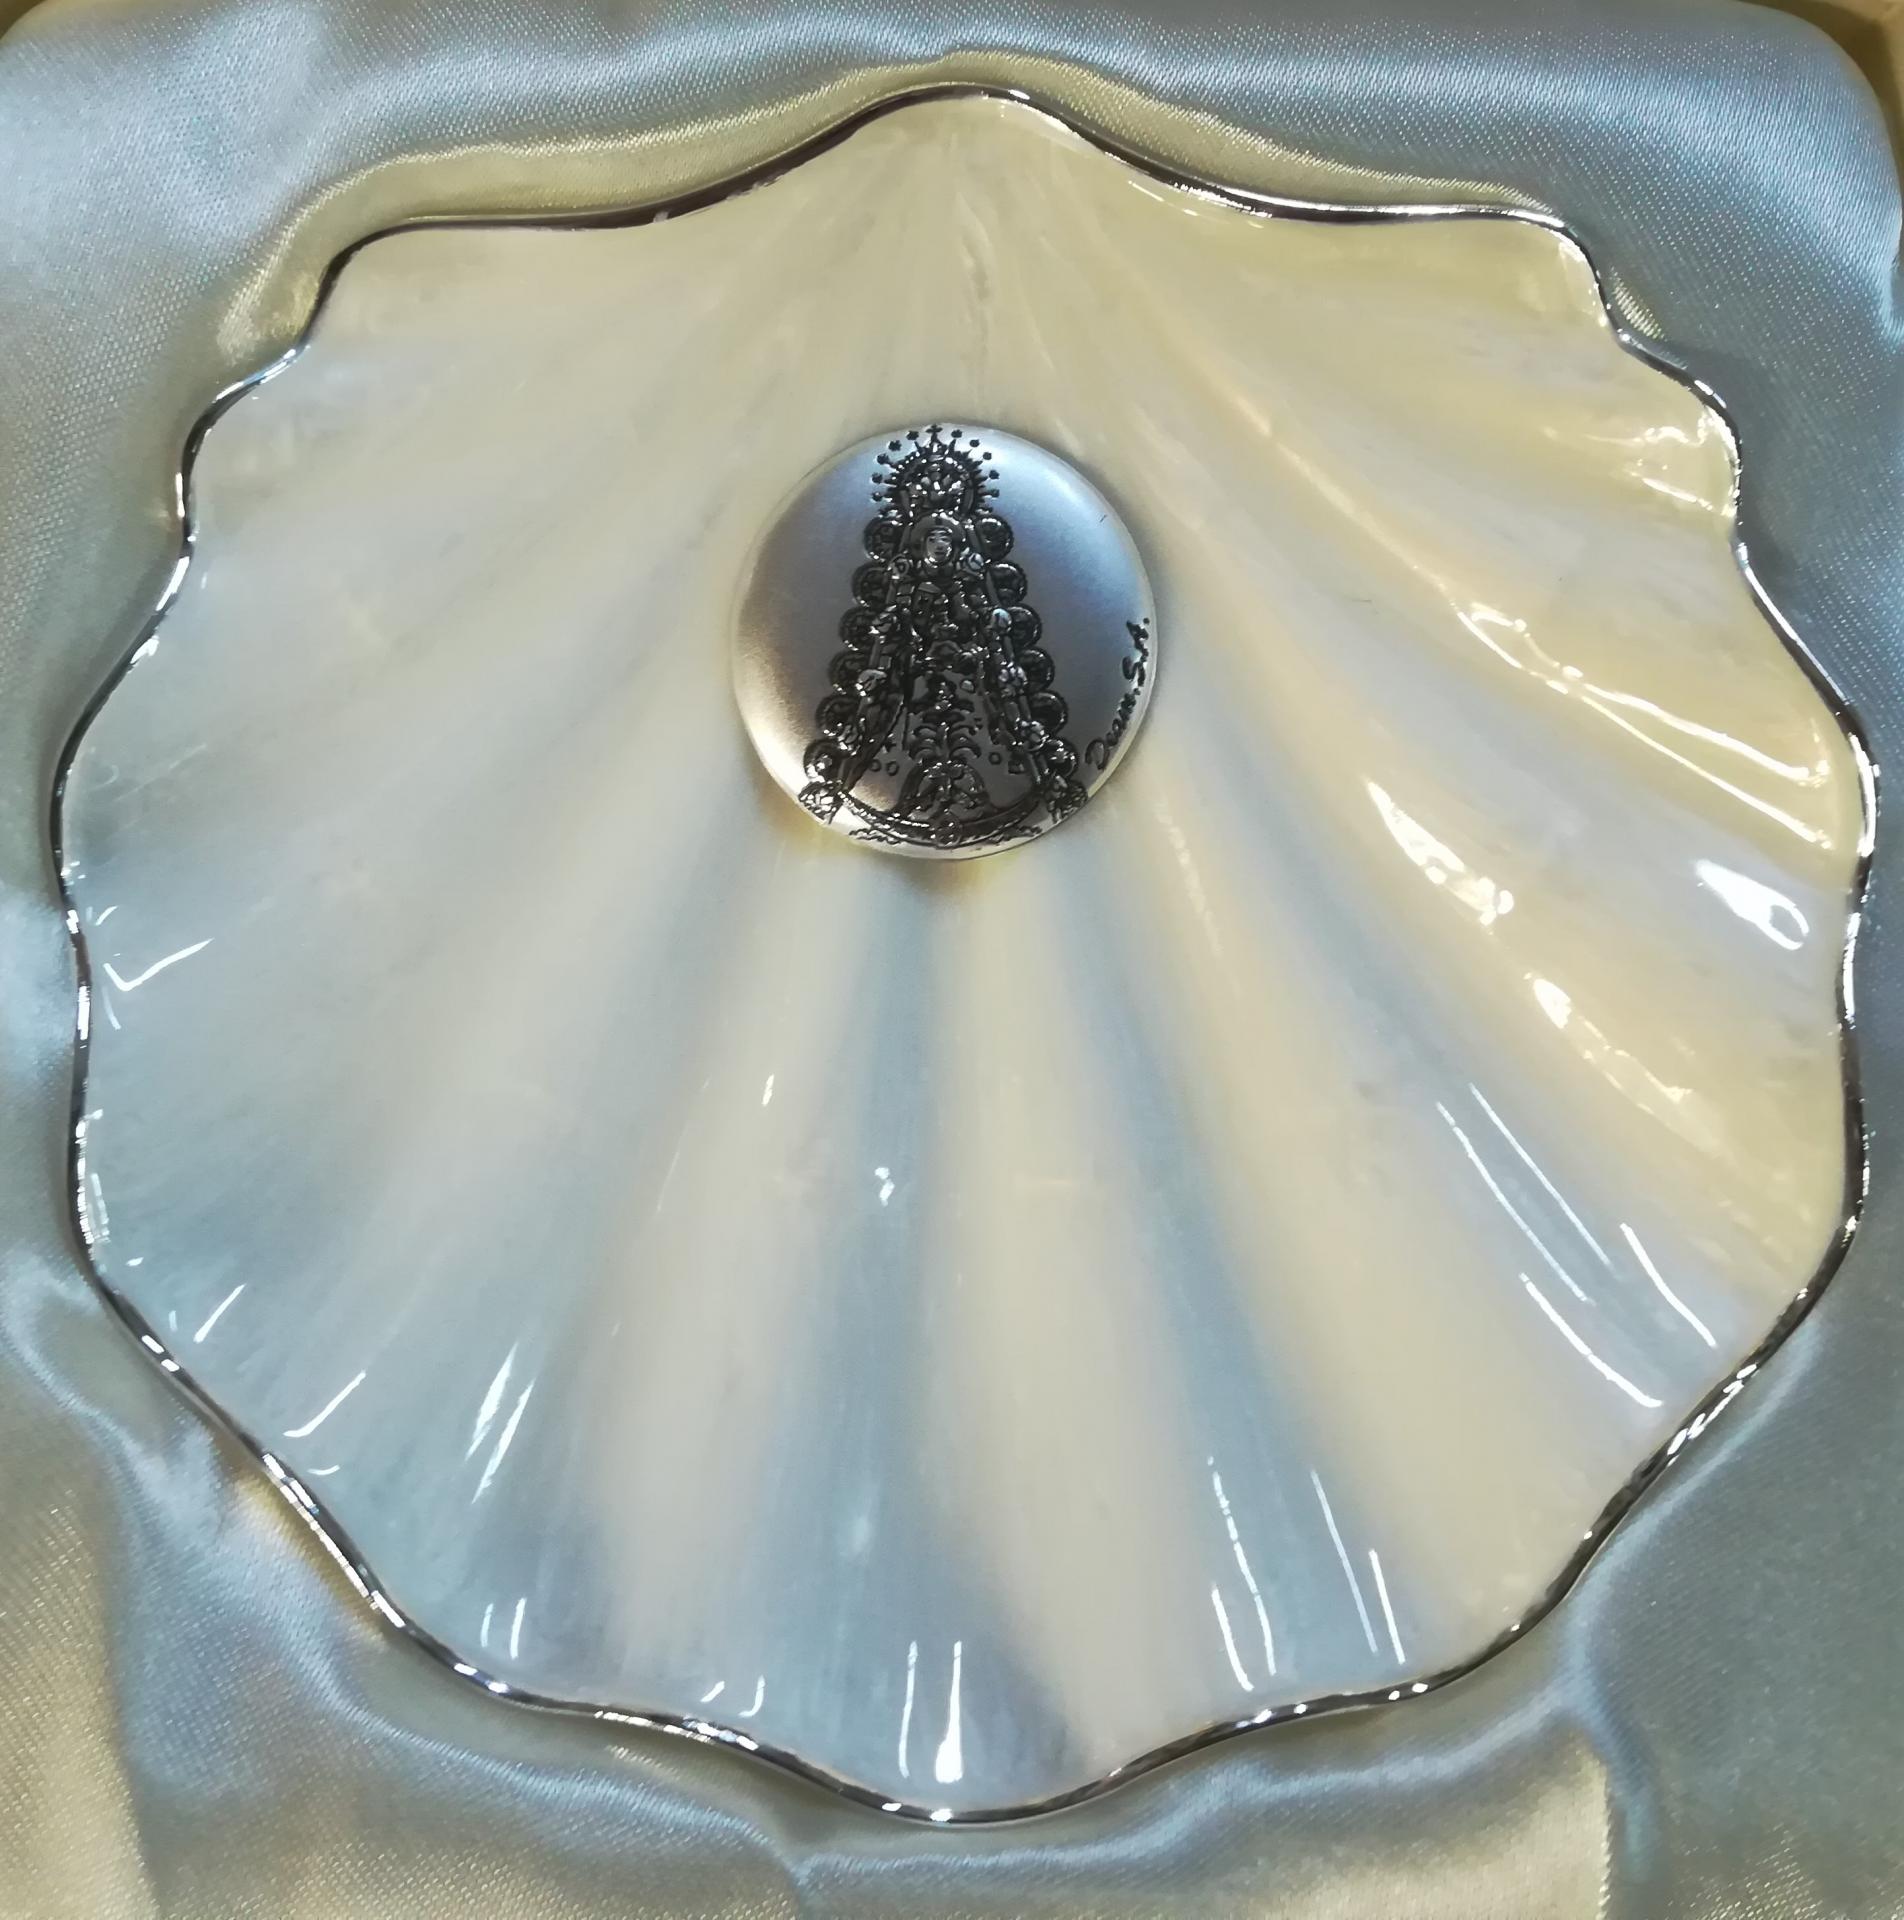 Concha Bautizo Cristal Nacar filo plata de 14x14 cm con ovalo Plata  Bilaminada de Virgen del Rocío de Deamsa : 29.90 euros